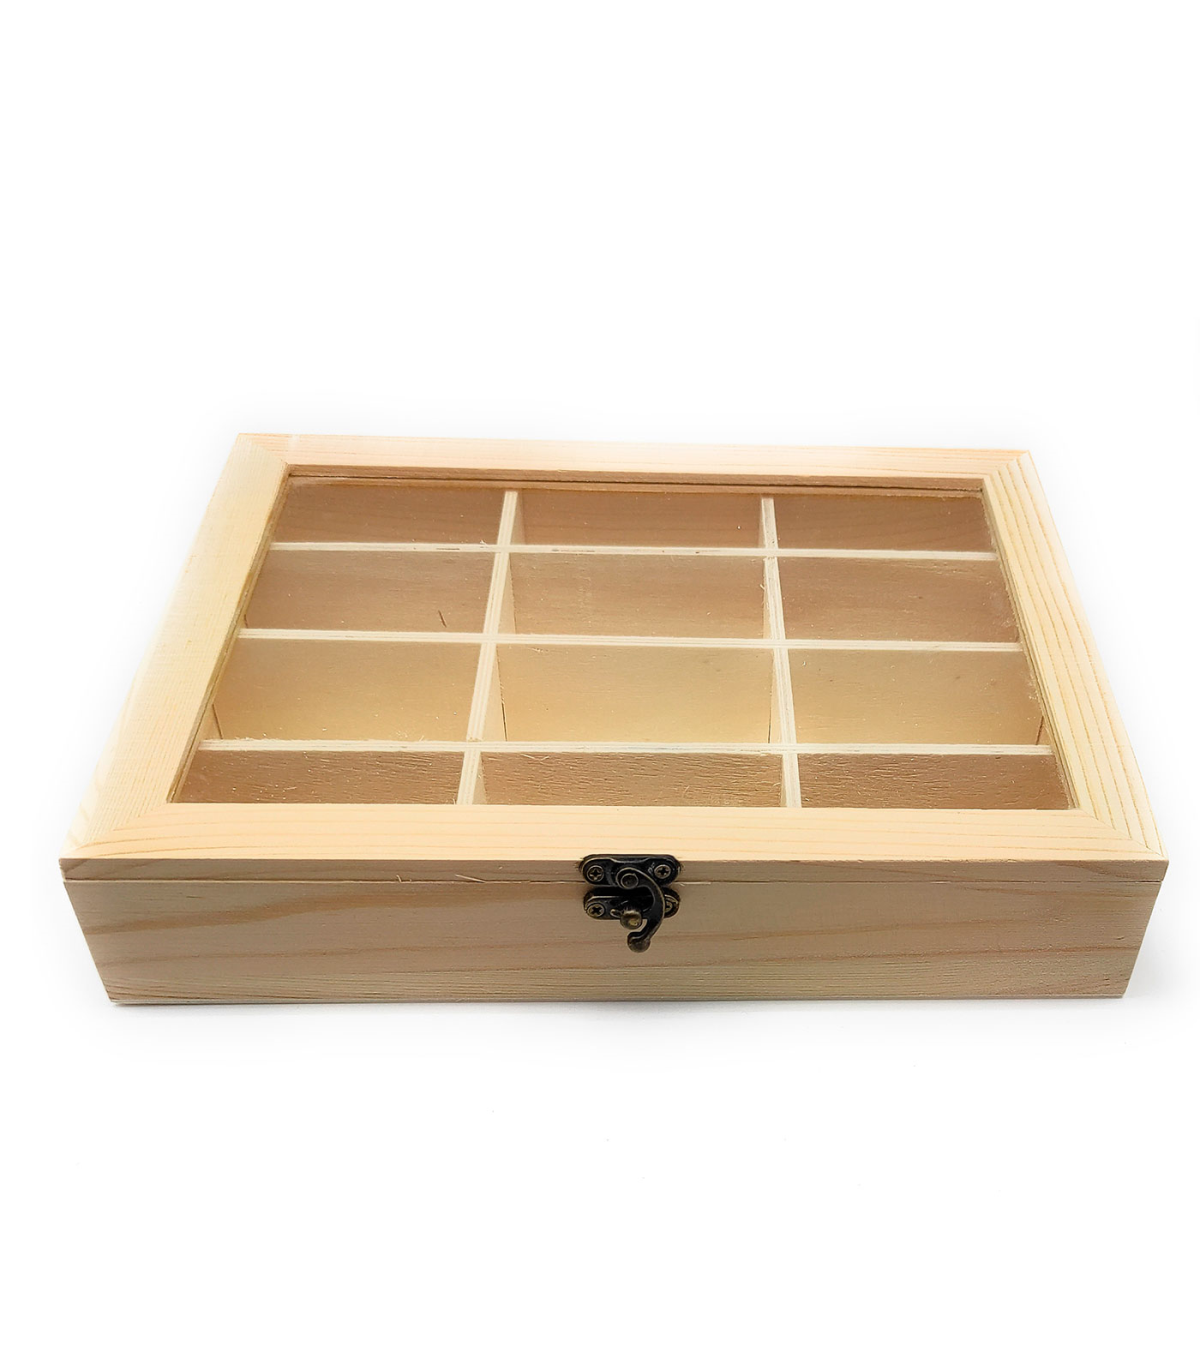 Caja de té de madera / Caja de 12 compartimentos / Caja marrón claro / Caja  de recuerdos de madera / Caja de joyería / Caja de almacenamiento de  colección / Exhibición de colección -  España